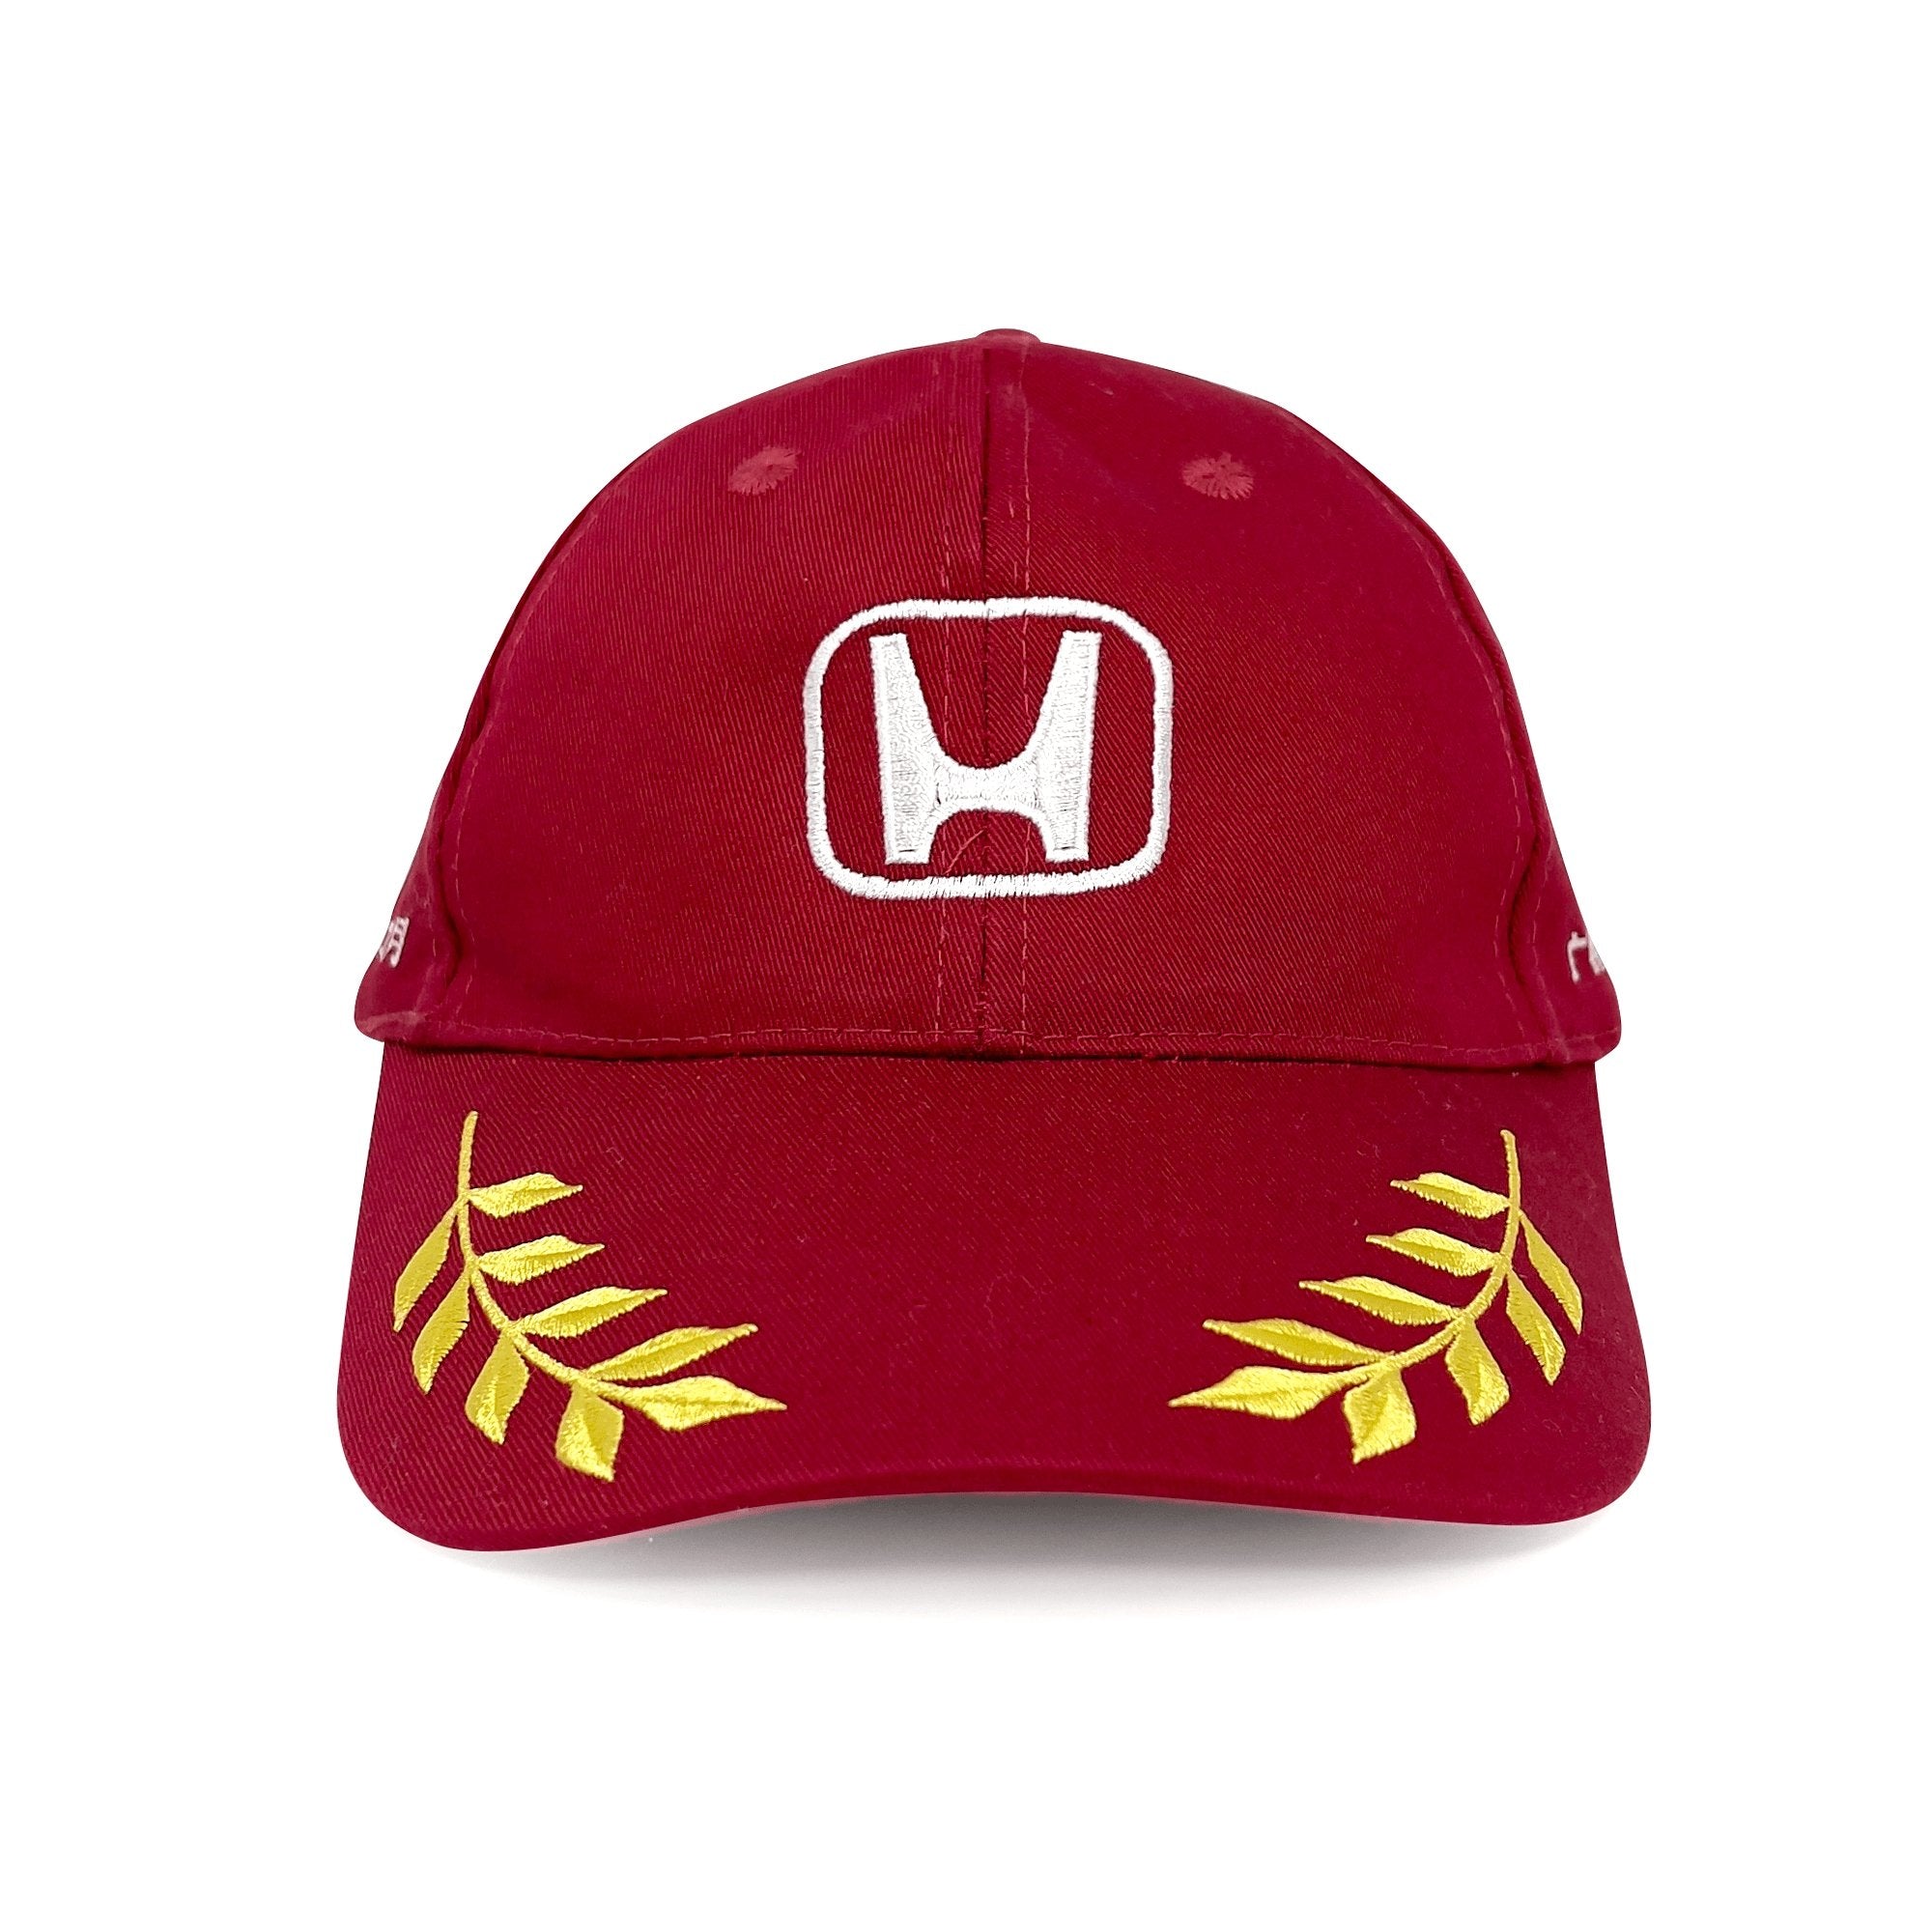 Rare Vintage JDM Japan Honda Motors Meeting Adjustable Hat Cap